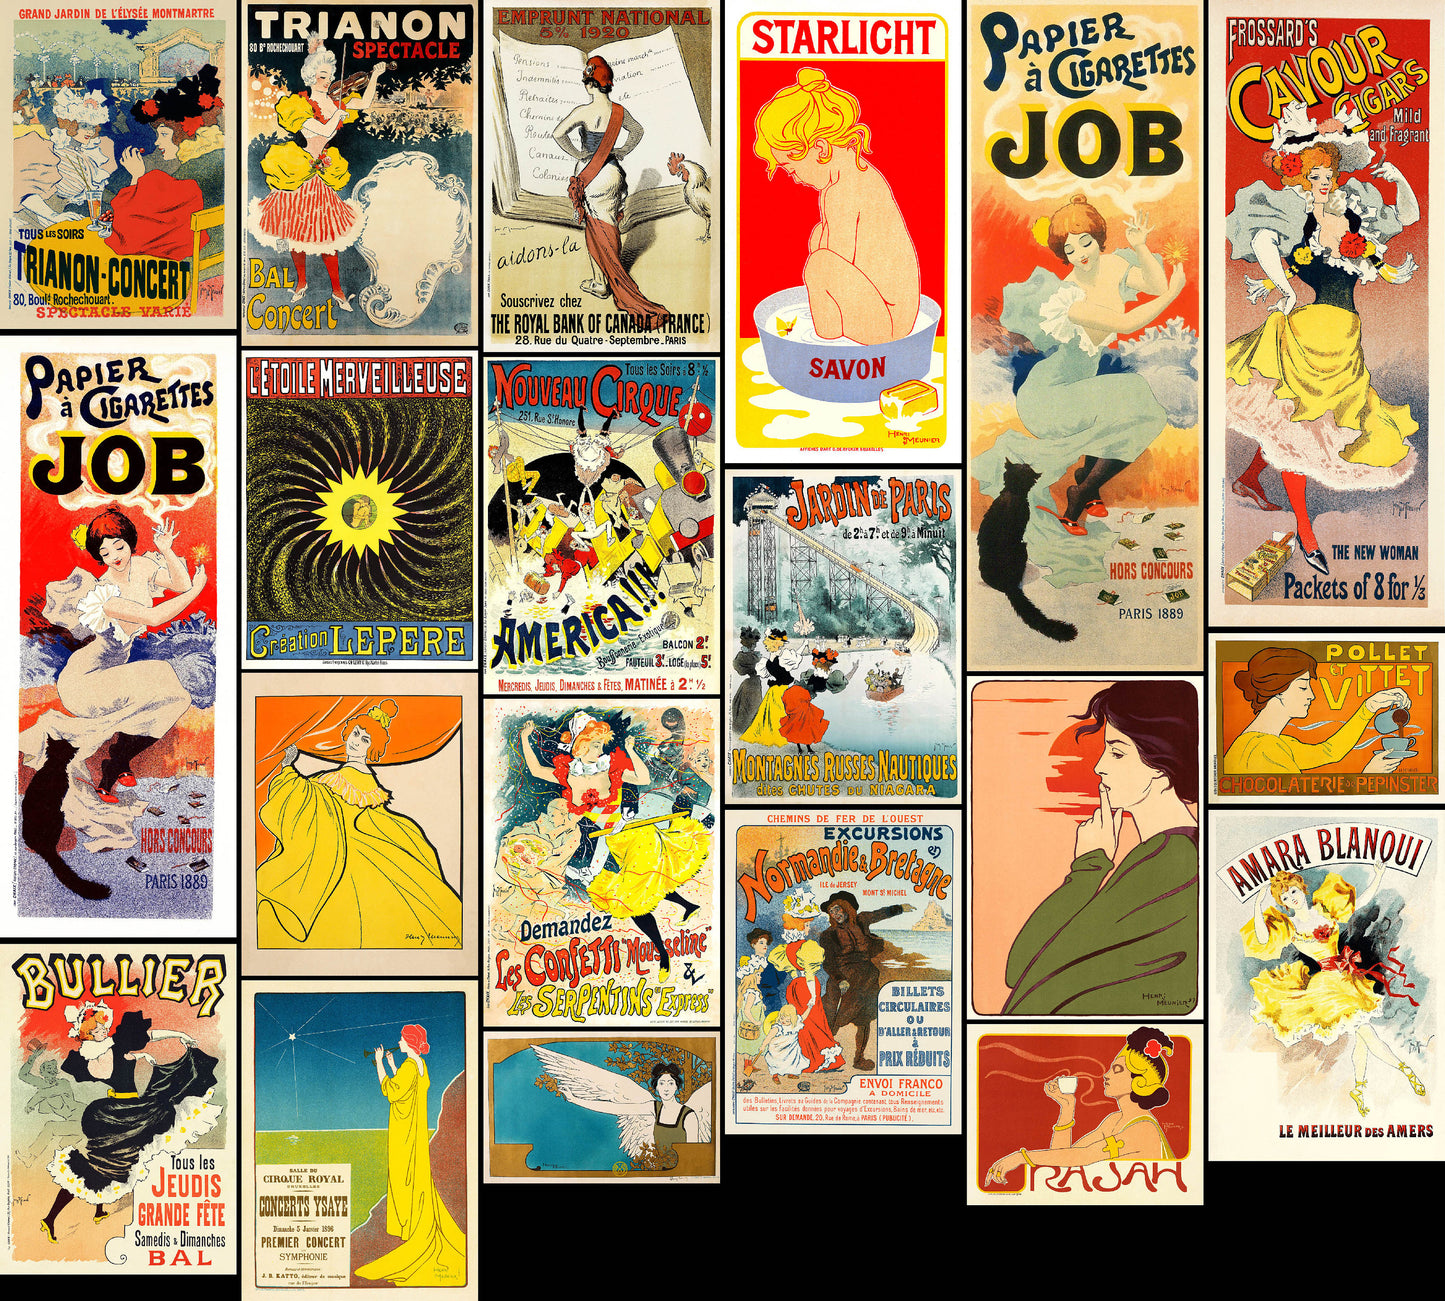 Henri Georges Meunier Poster Advertisements [20 Images]